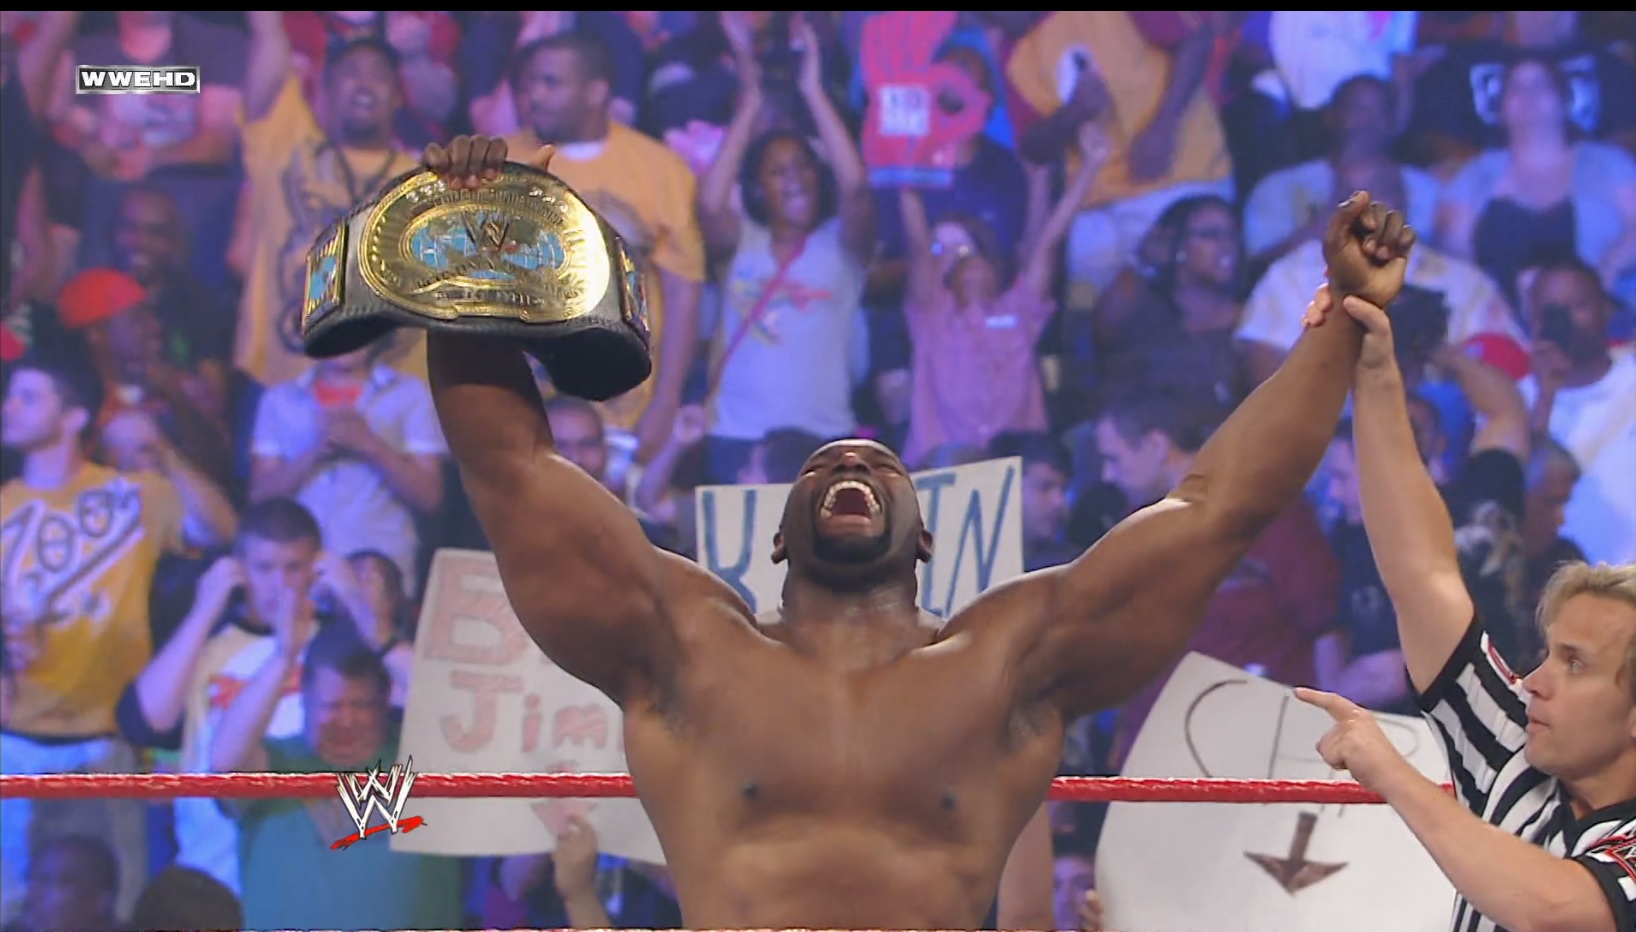 Ezekiel Jackson as WWE Intercontinental Champion.